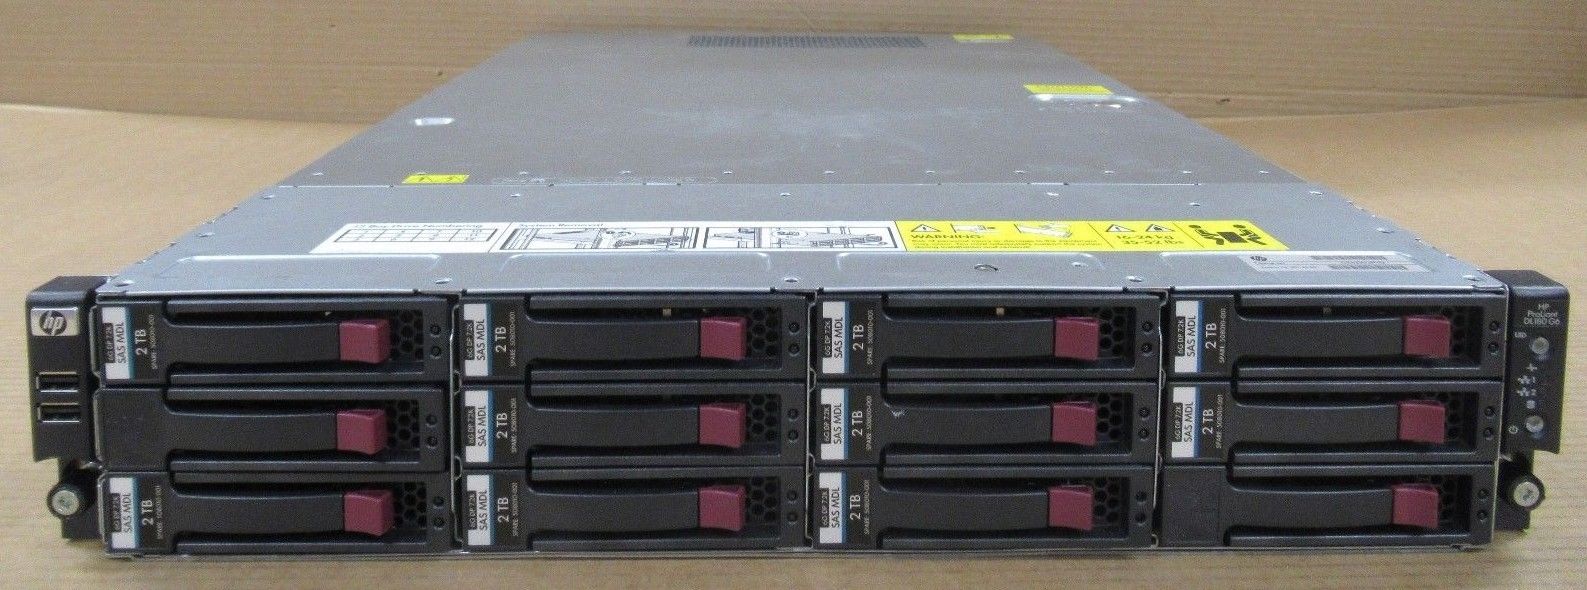 Máy Server 1U 2U HP DELL IBM FUJITSU HITACHI Nhập Khẩu trực tiếp từ mỹ - 5